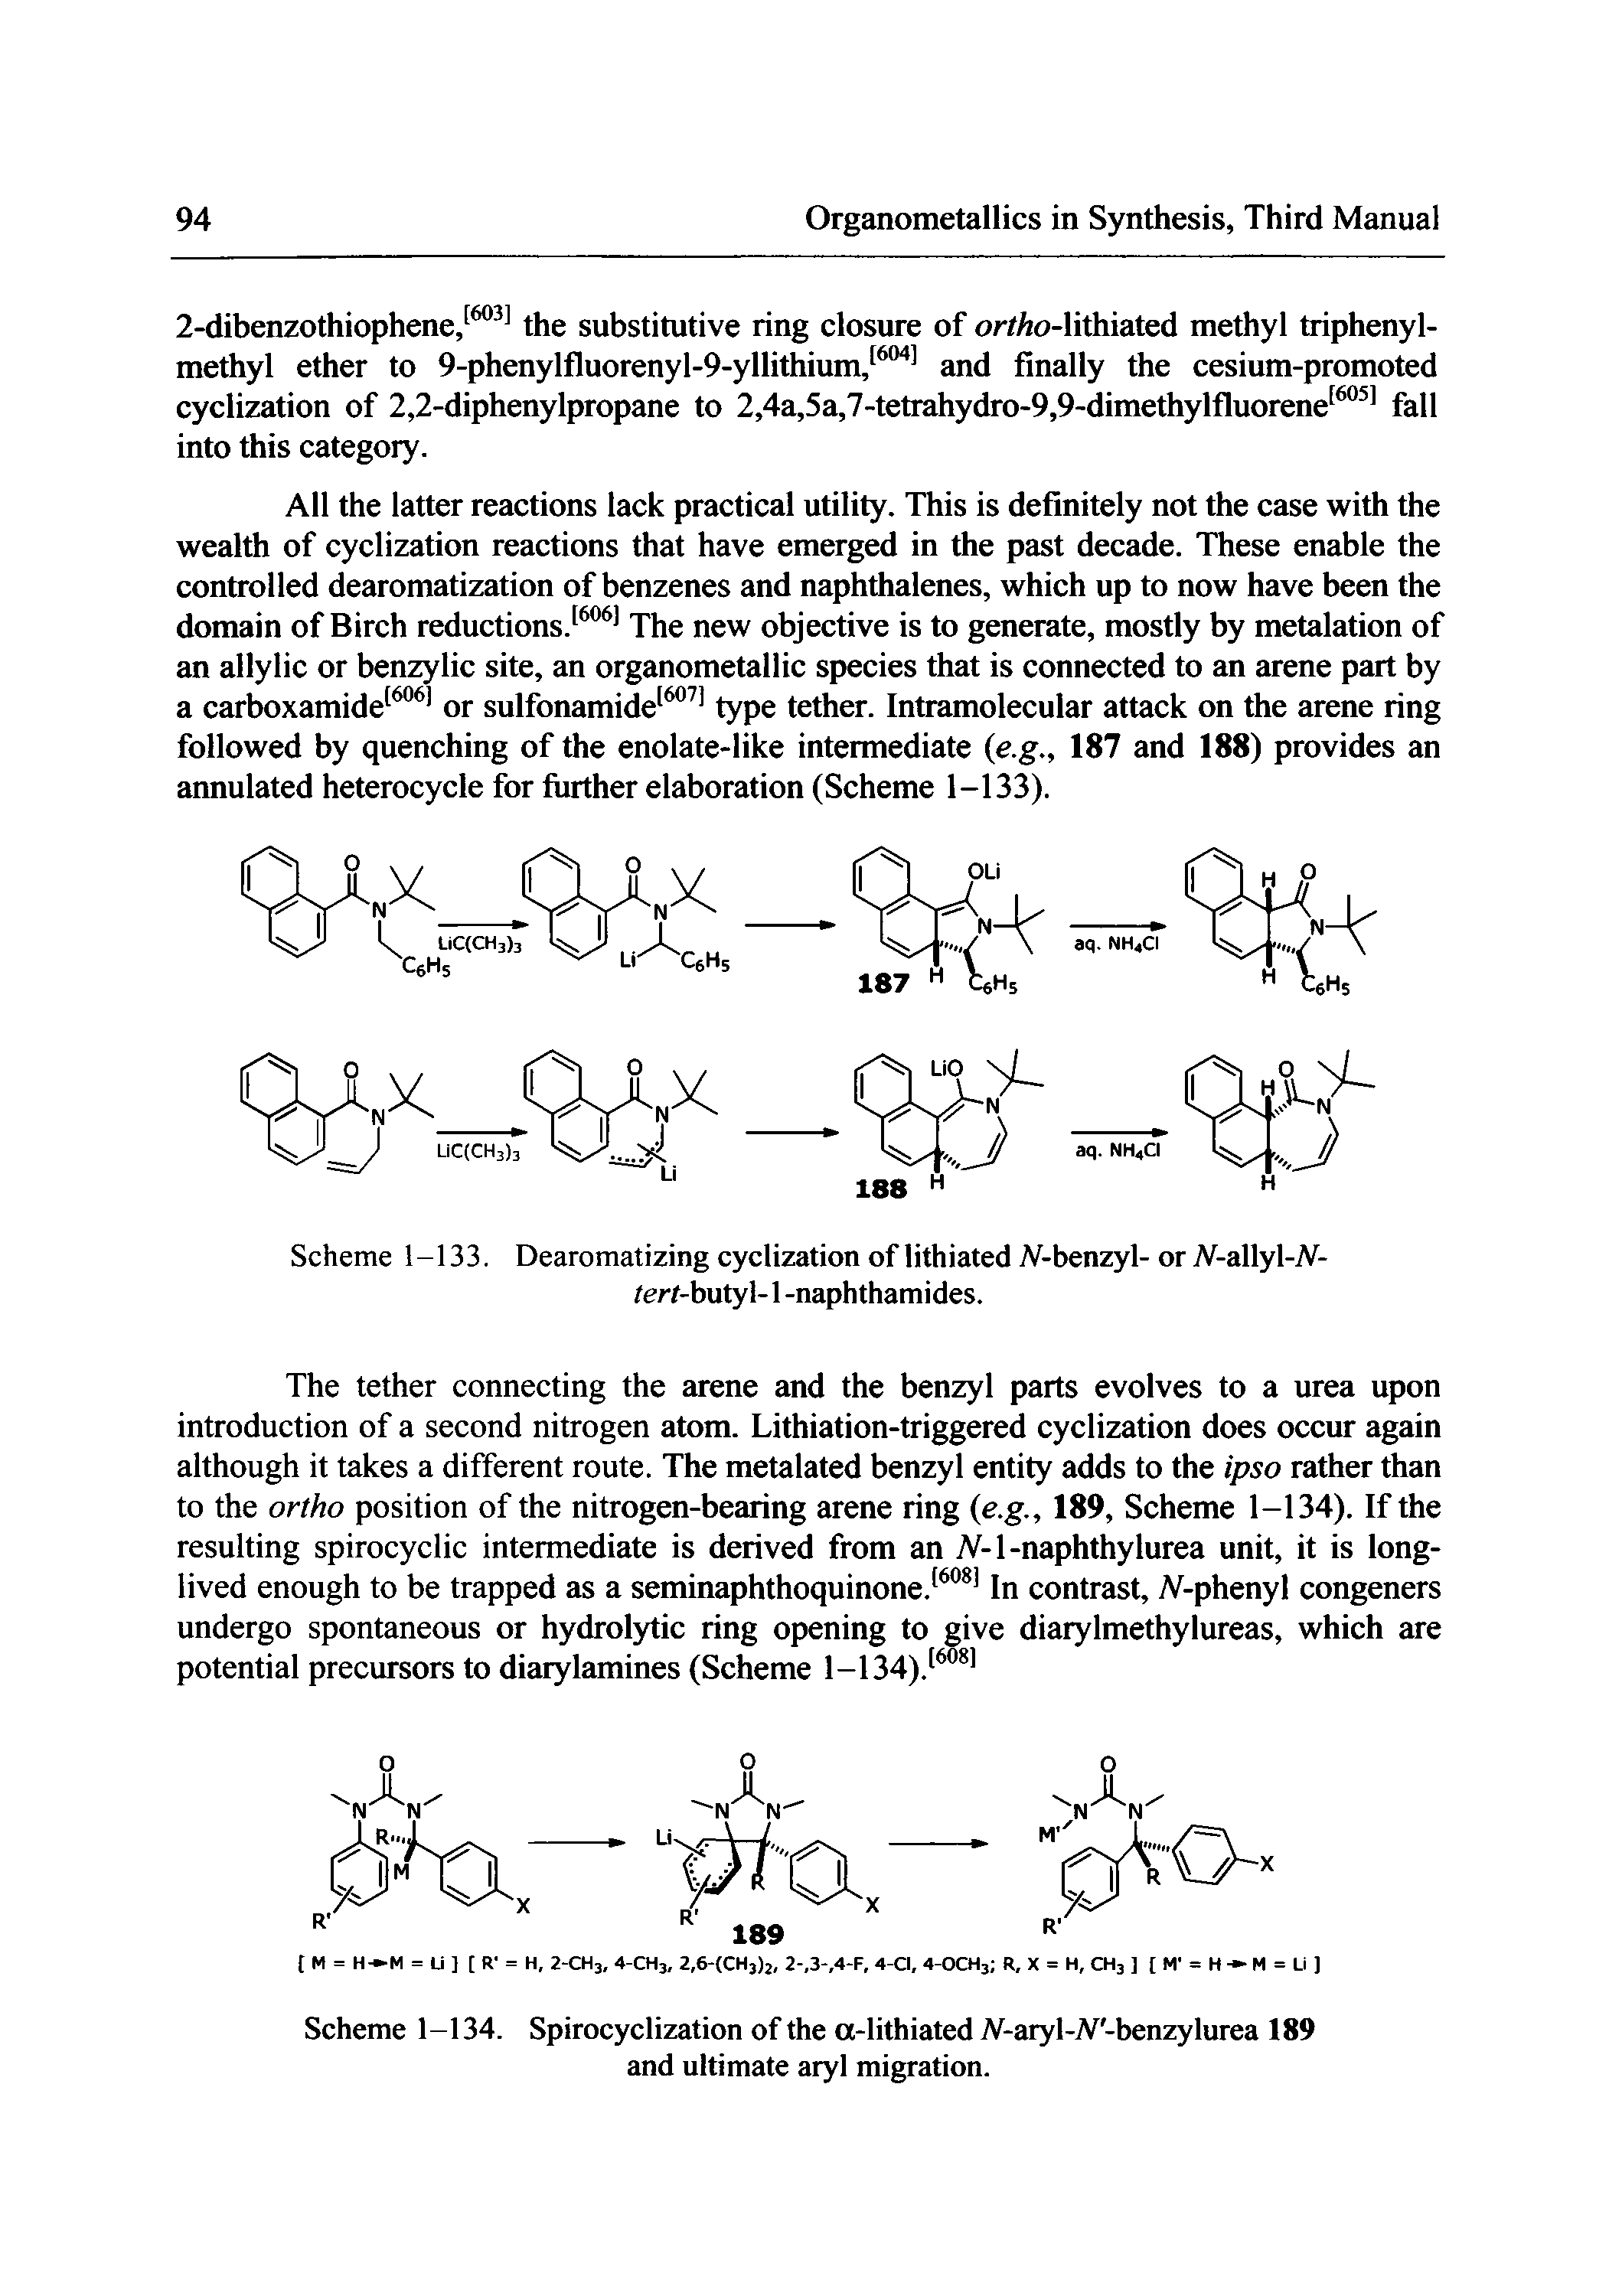 Scheme 1-133. Dearomatizing cyclization of lithiated TV -benzyl- or 7V-allyl-iV-tert-butyl-1 -naphthamides.